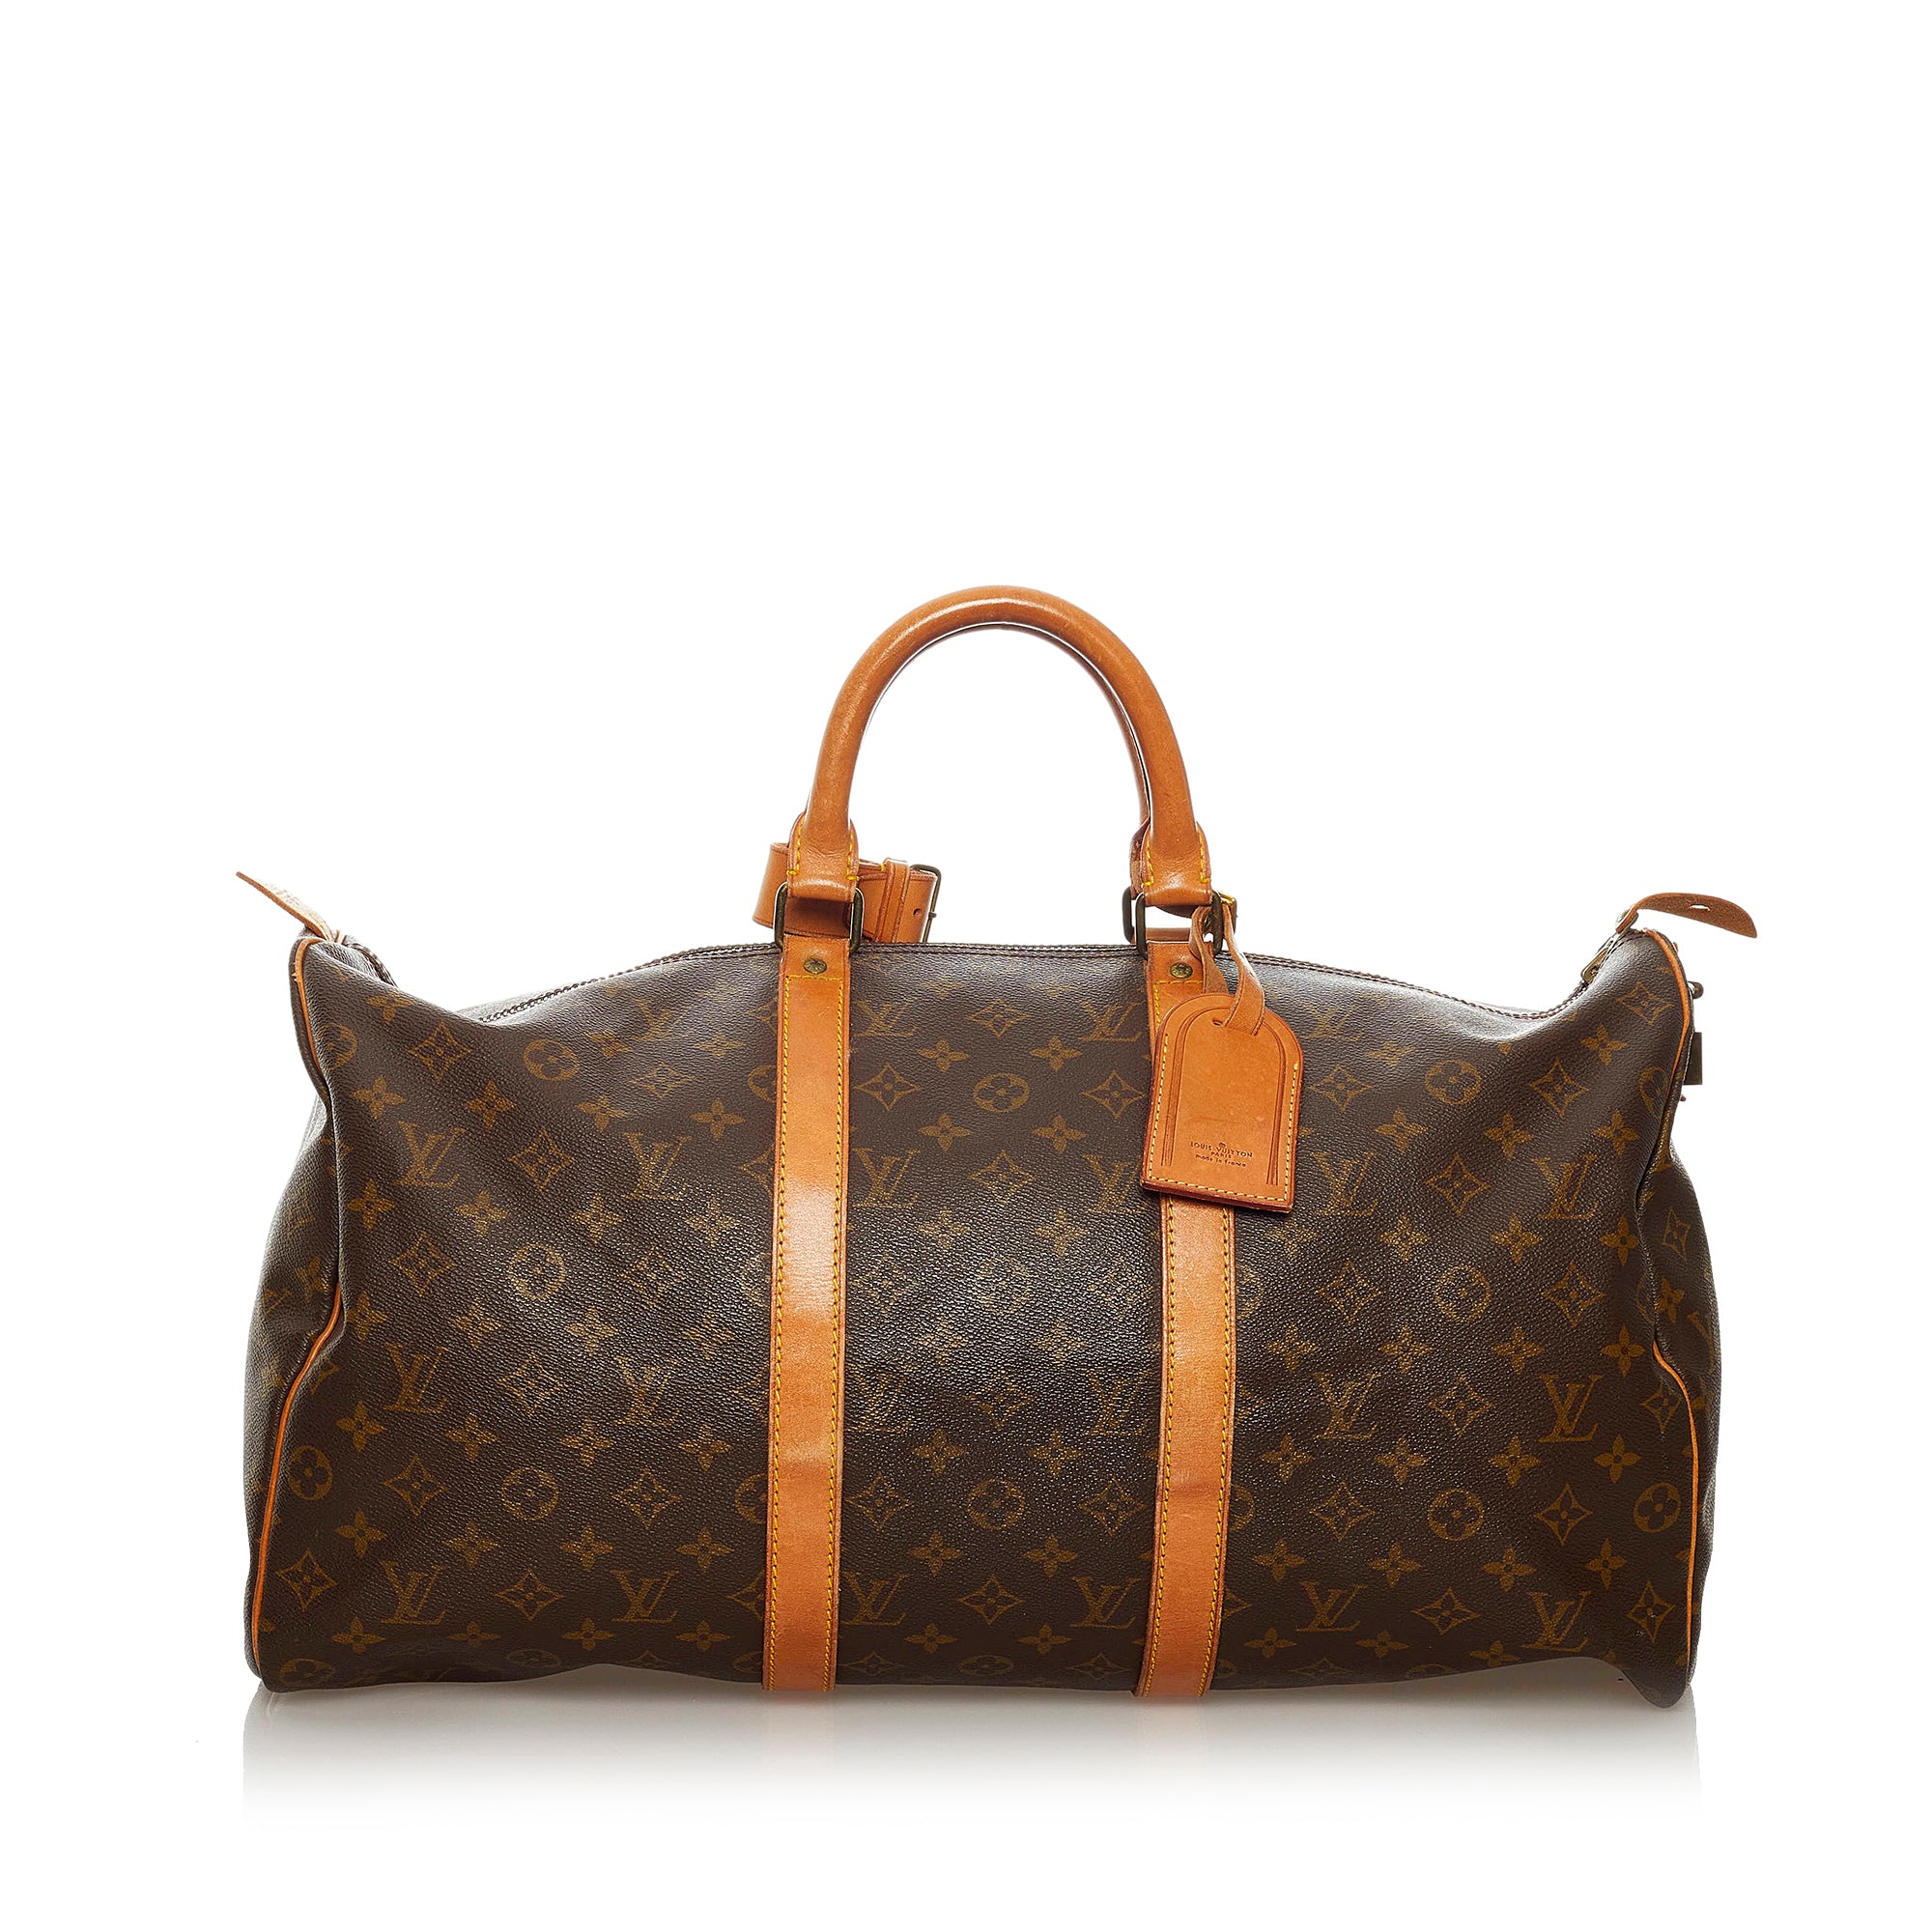 Louis Vuitton suitcase Pégase in brown epi leather